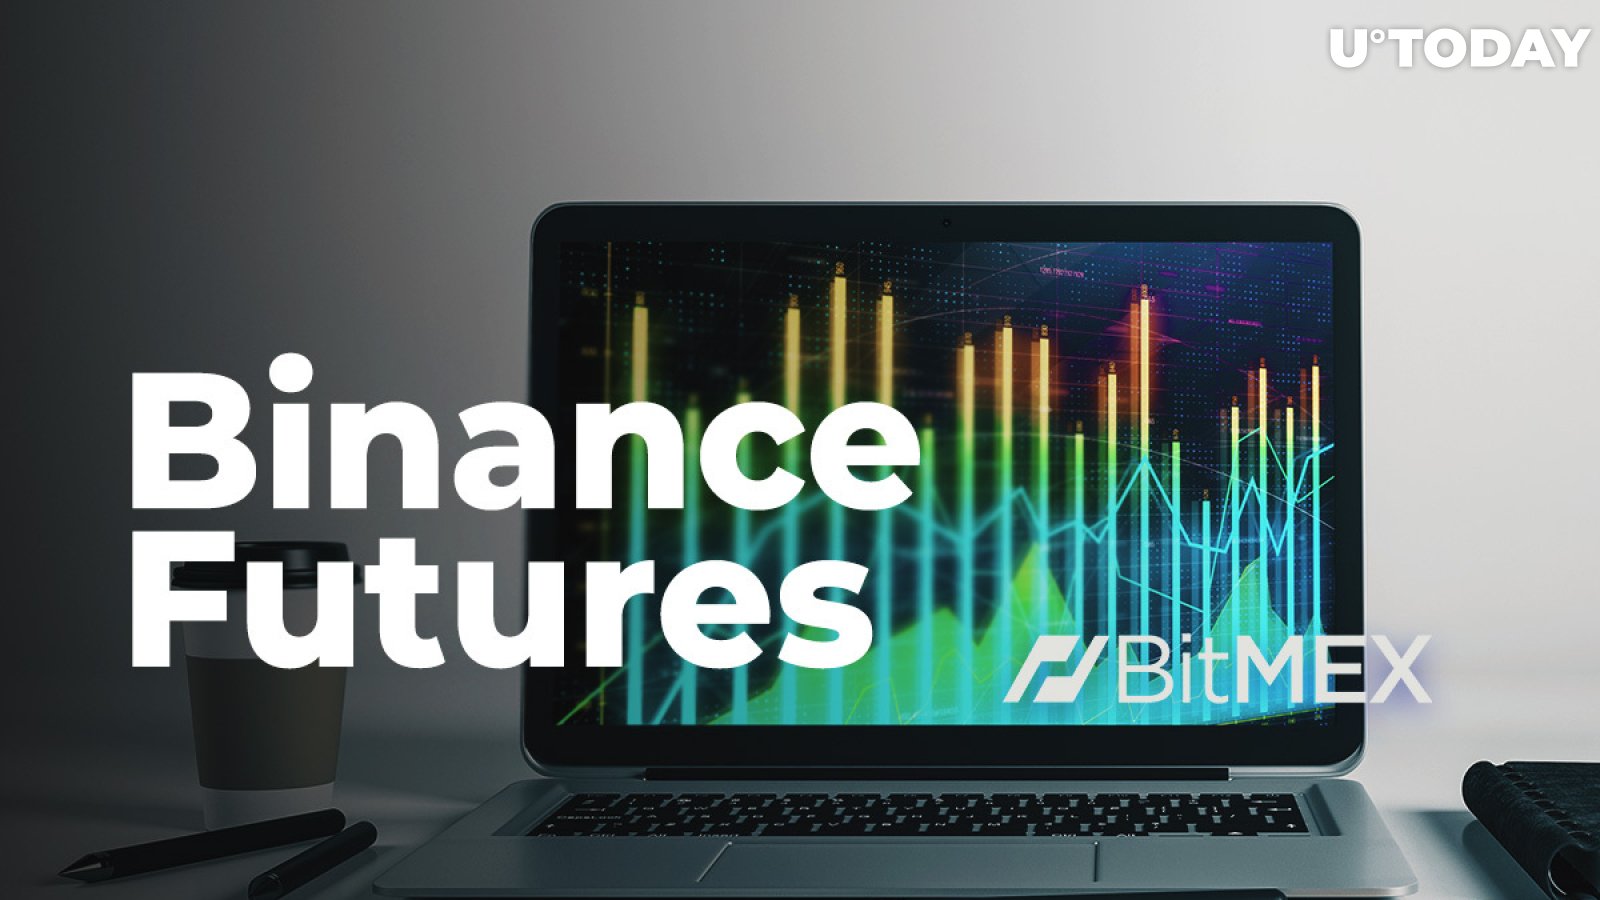 Binance Futures Exceeds BitMEX By Trading Volume